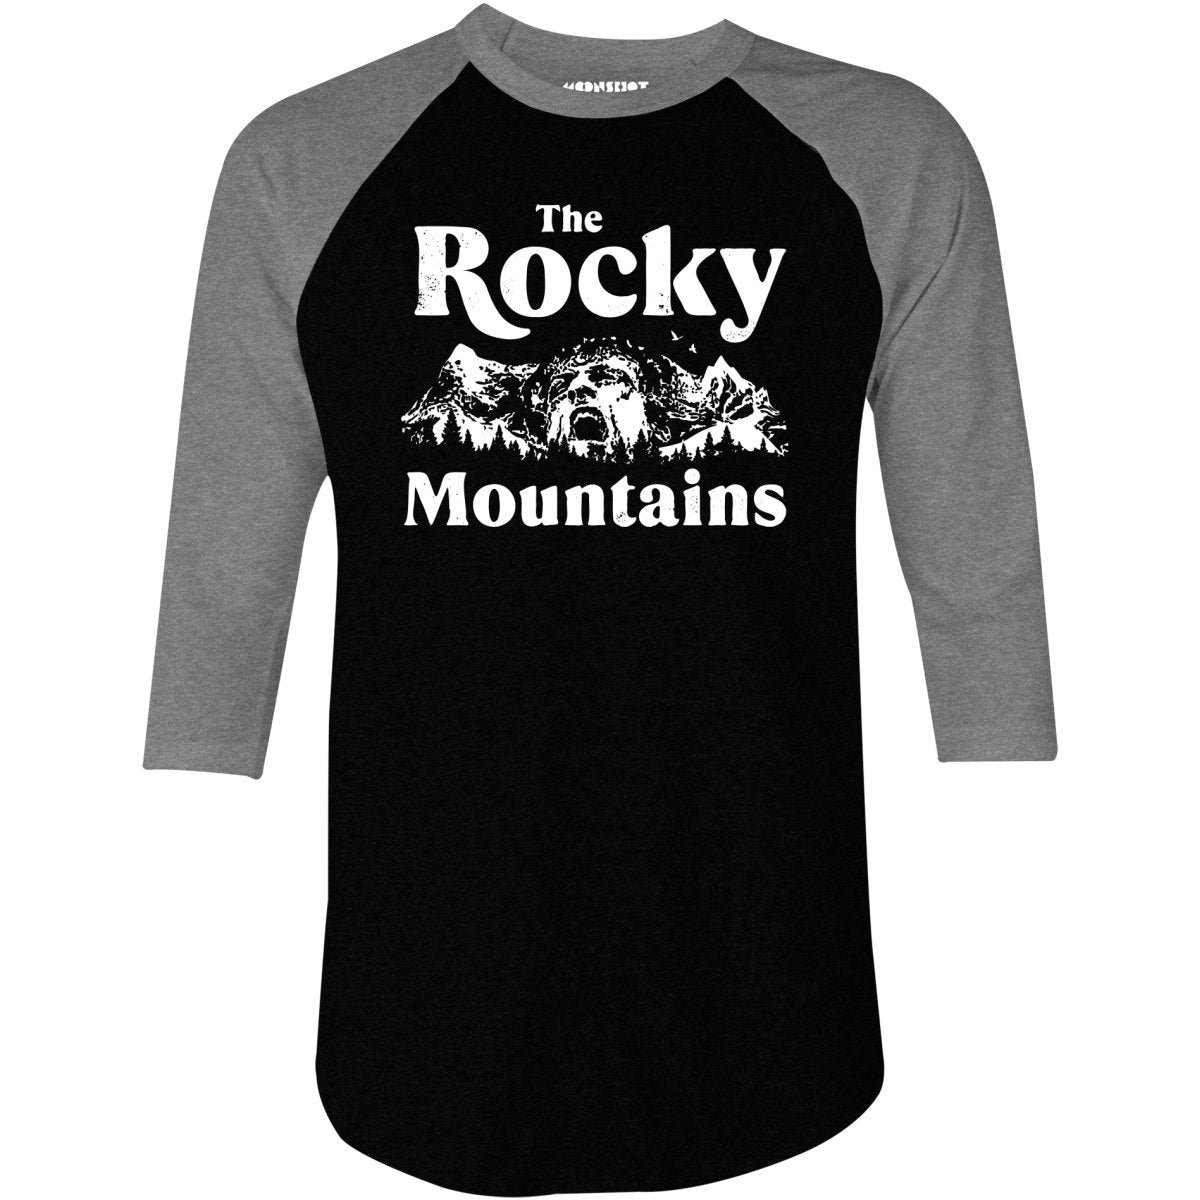 The Rocky Mountains - 3/4 Sleeve Raglan T-Shirt